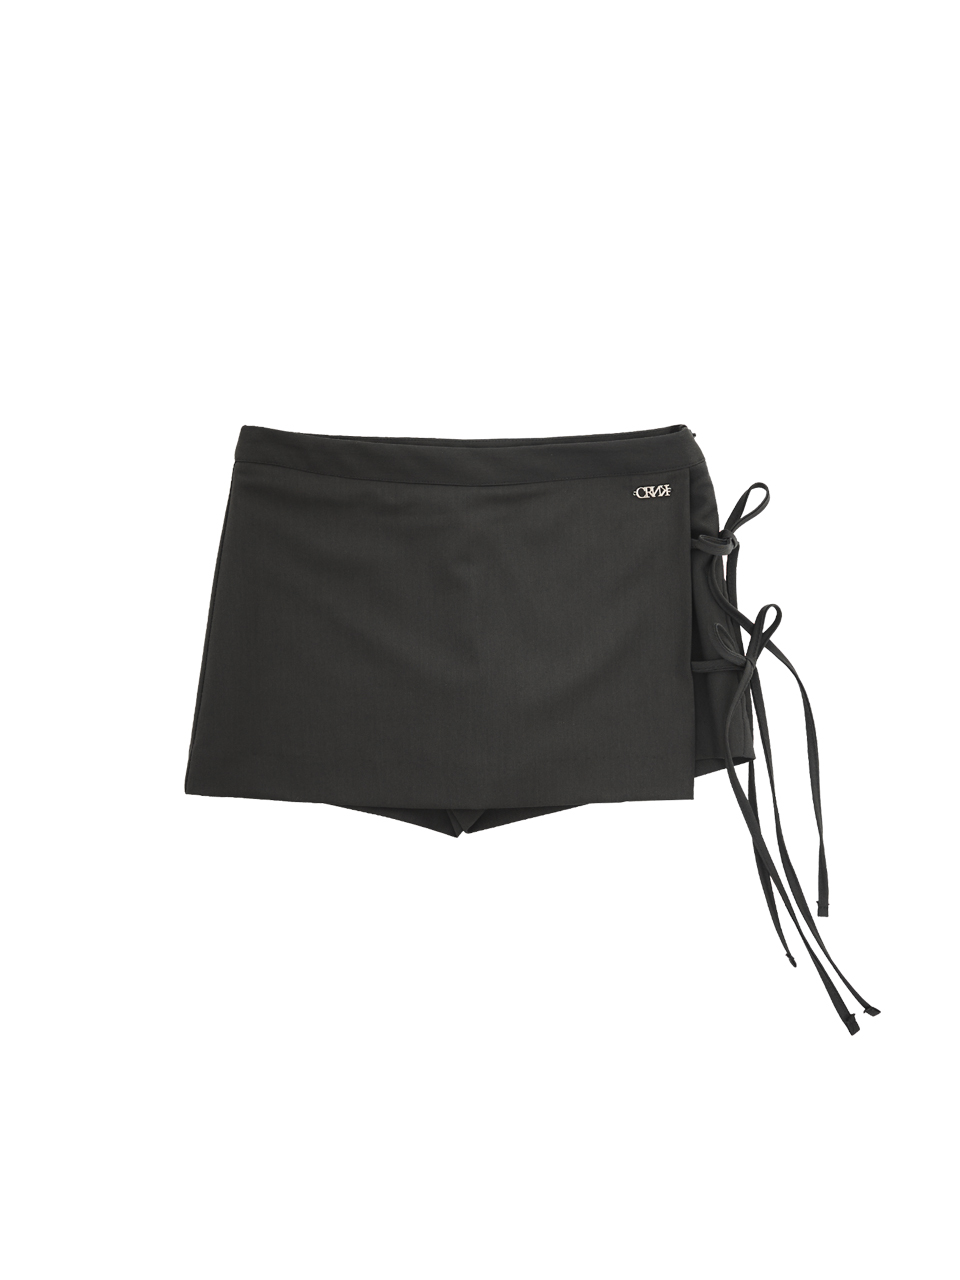 String Wrap Skirt Pants - Charcoal